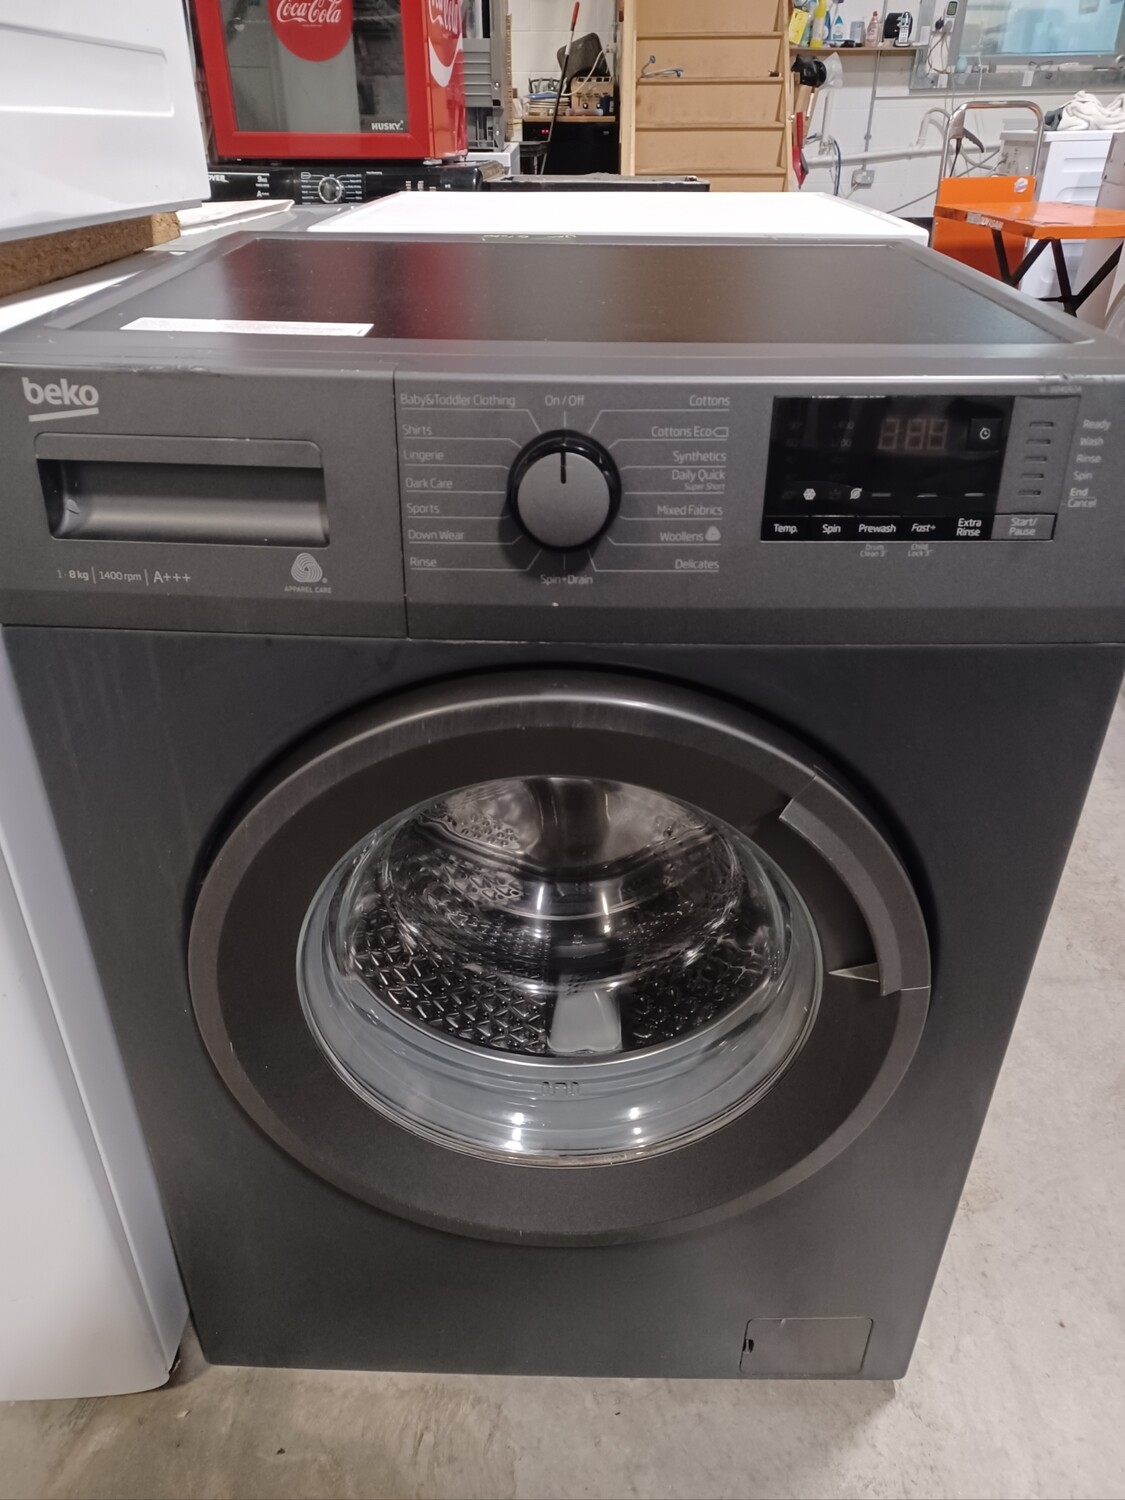 Beko WTB841R2A A+++ 8kg Load, 1400 Spin Washing Machine - Graphite Grey - Refurbished - 6 Month Guarantee